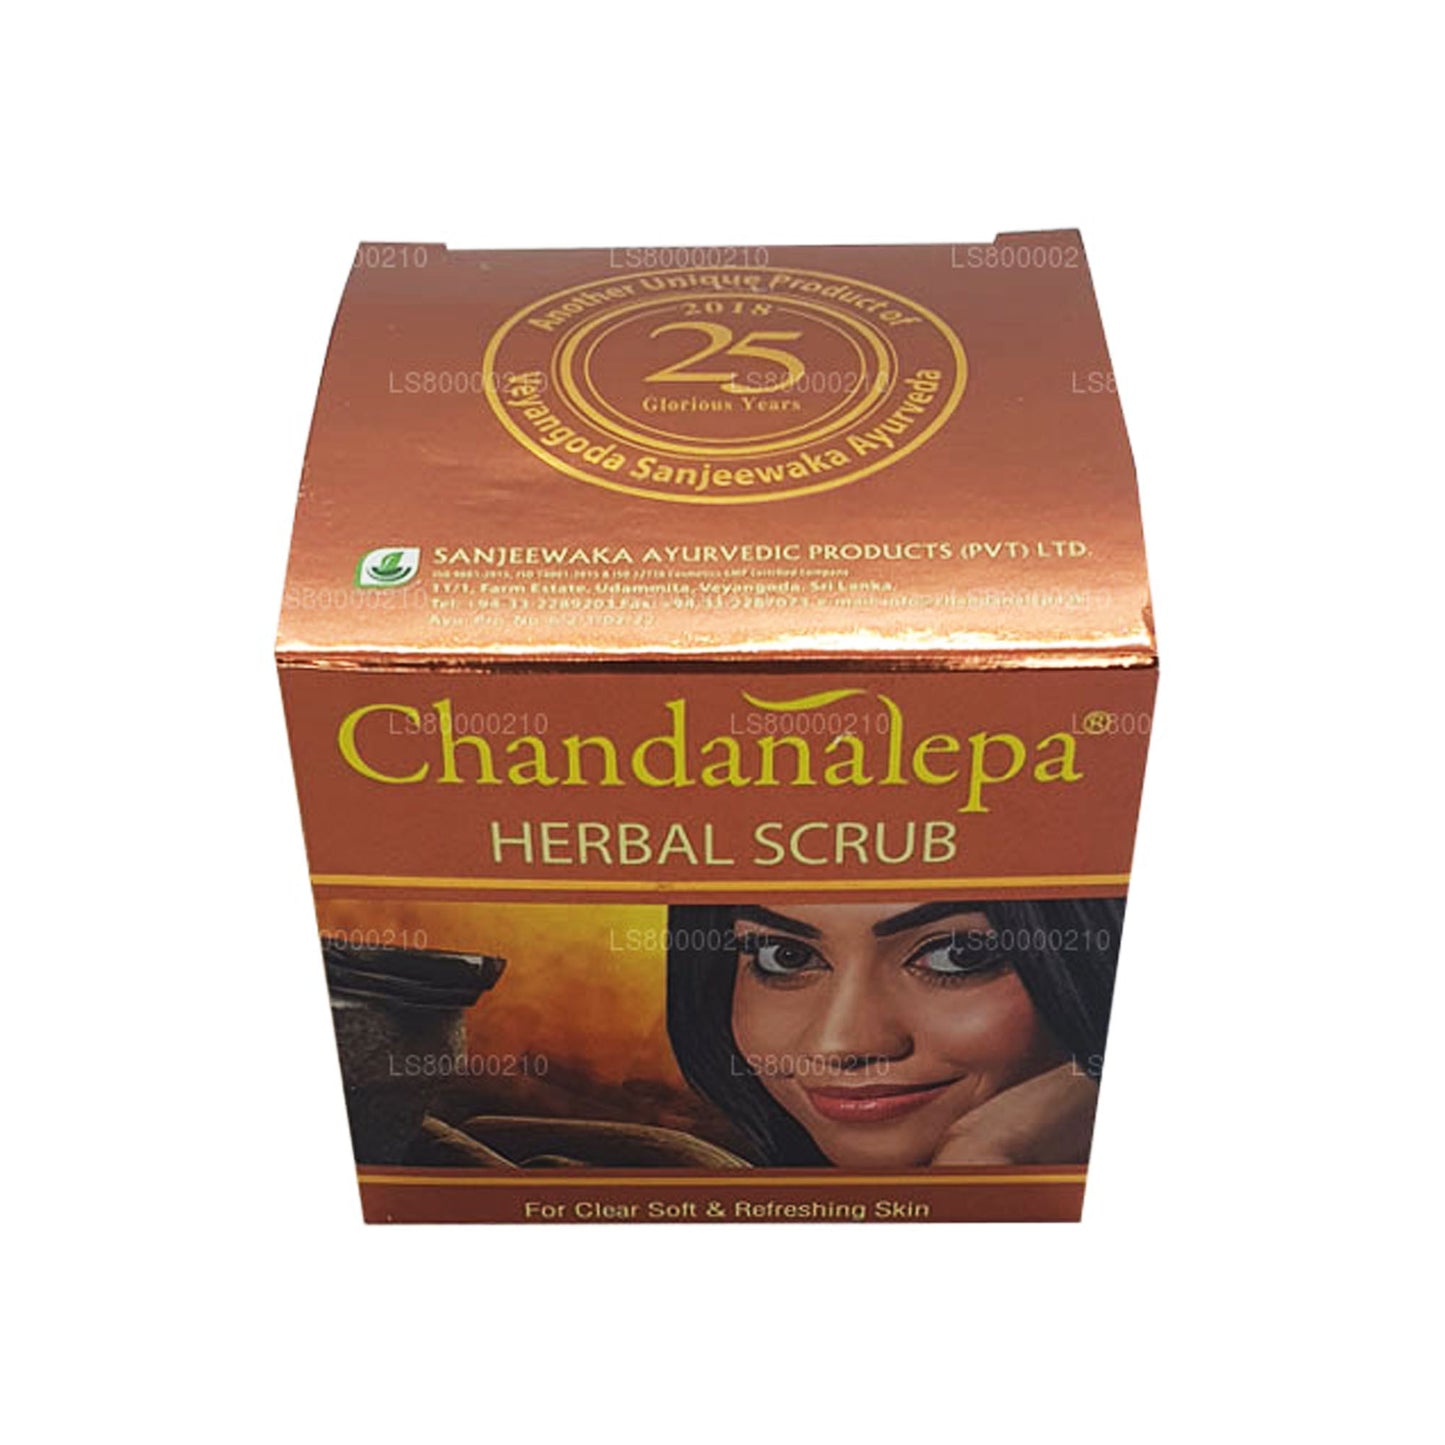 Chandanalepa Herbal Scrub (40g)